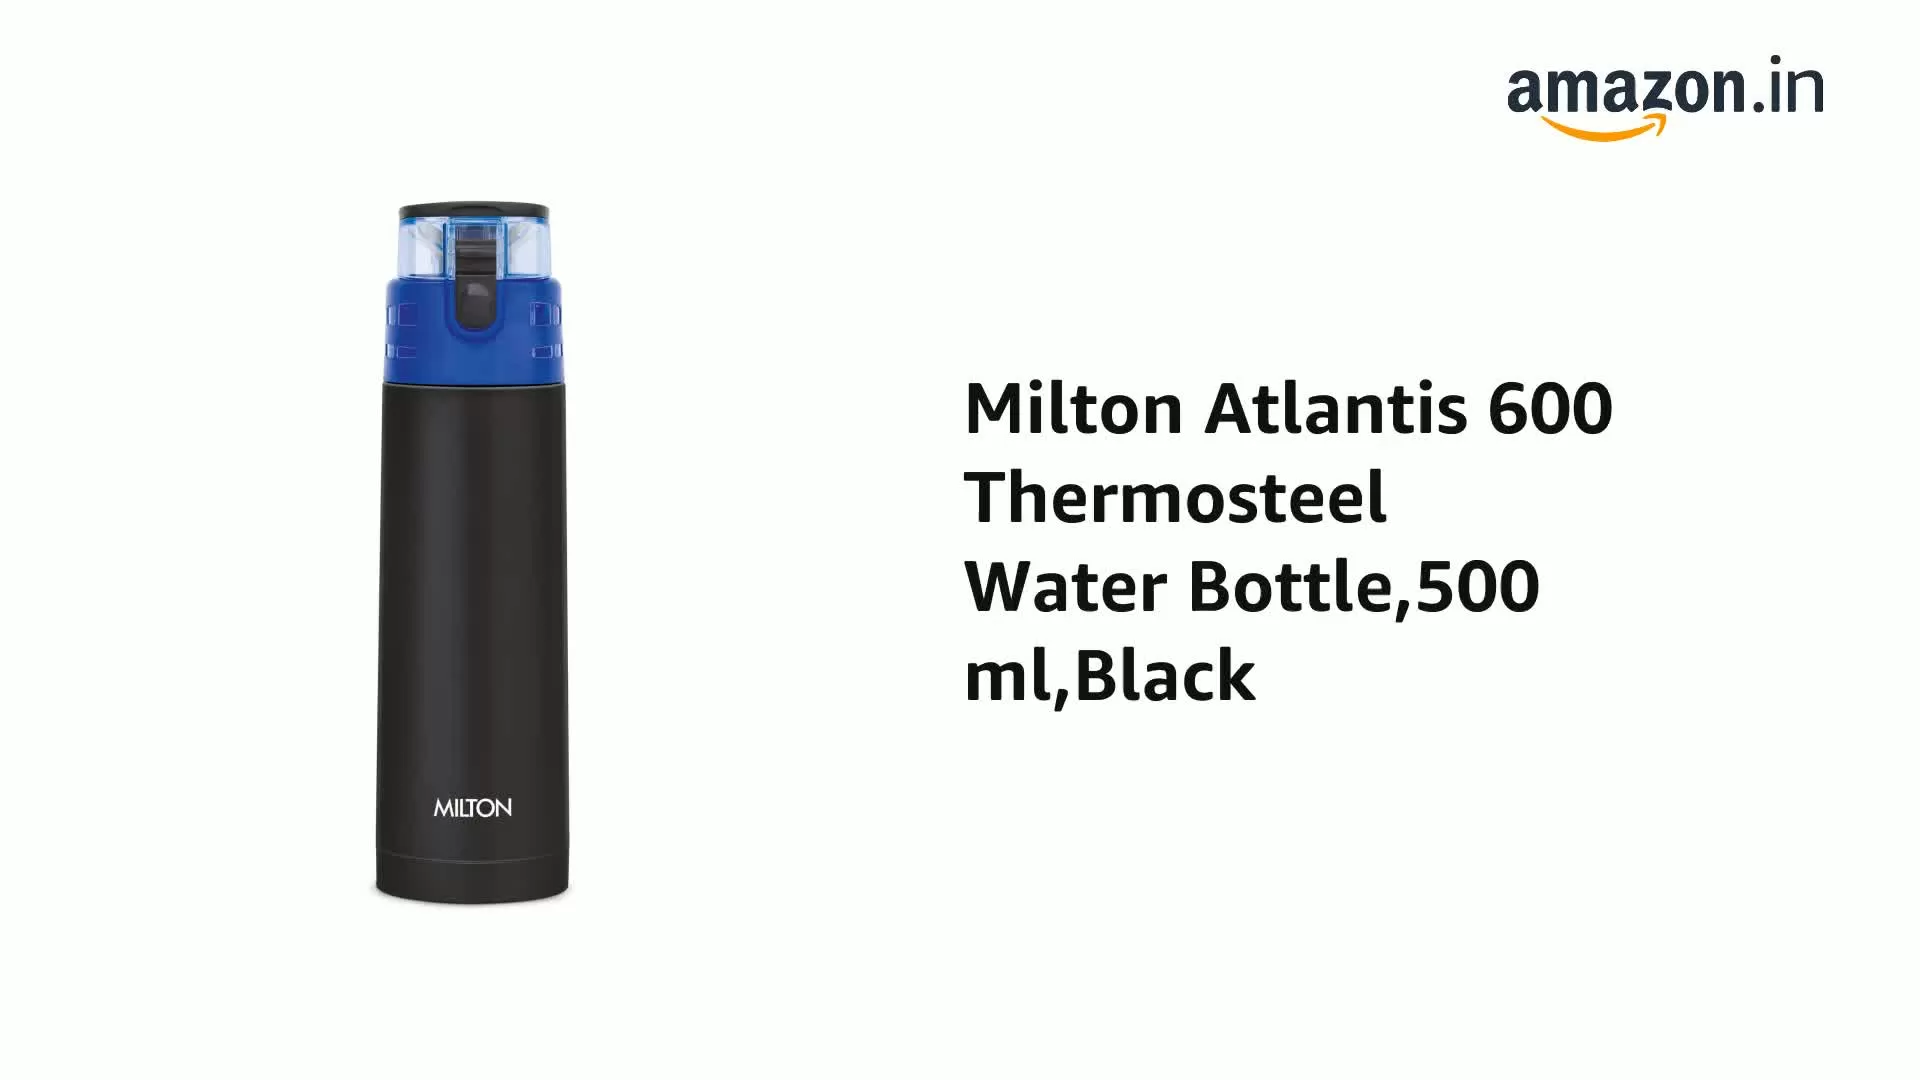 Atlantis 600 Thermosteel WaterBottle500 mlBlack, 2 image